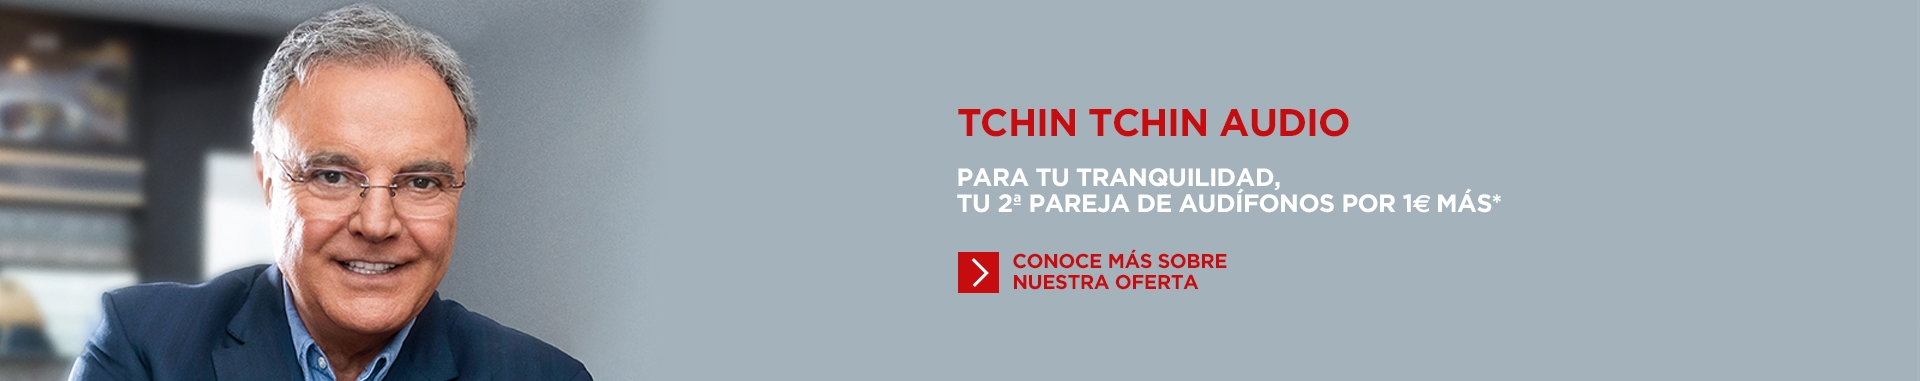 Tchin Tchin Audio - Tu pareja de audifonos por 1 euro mas